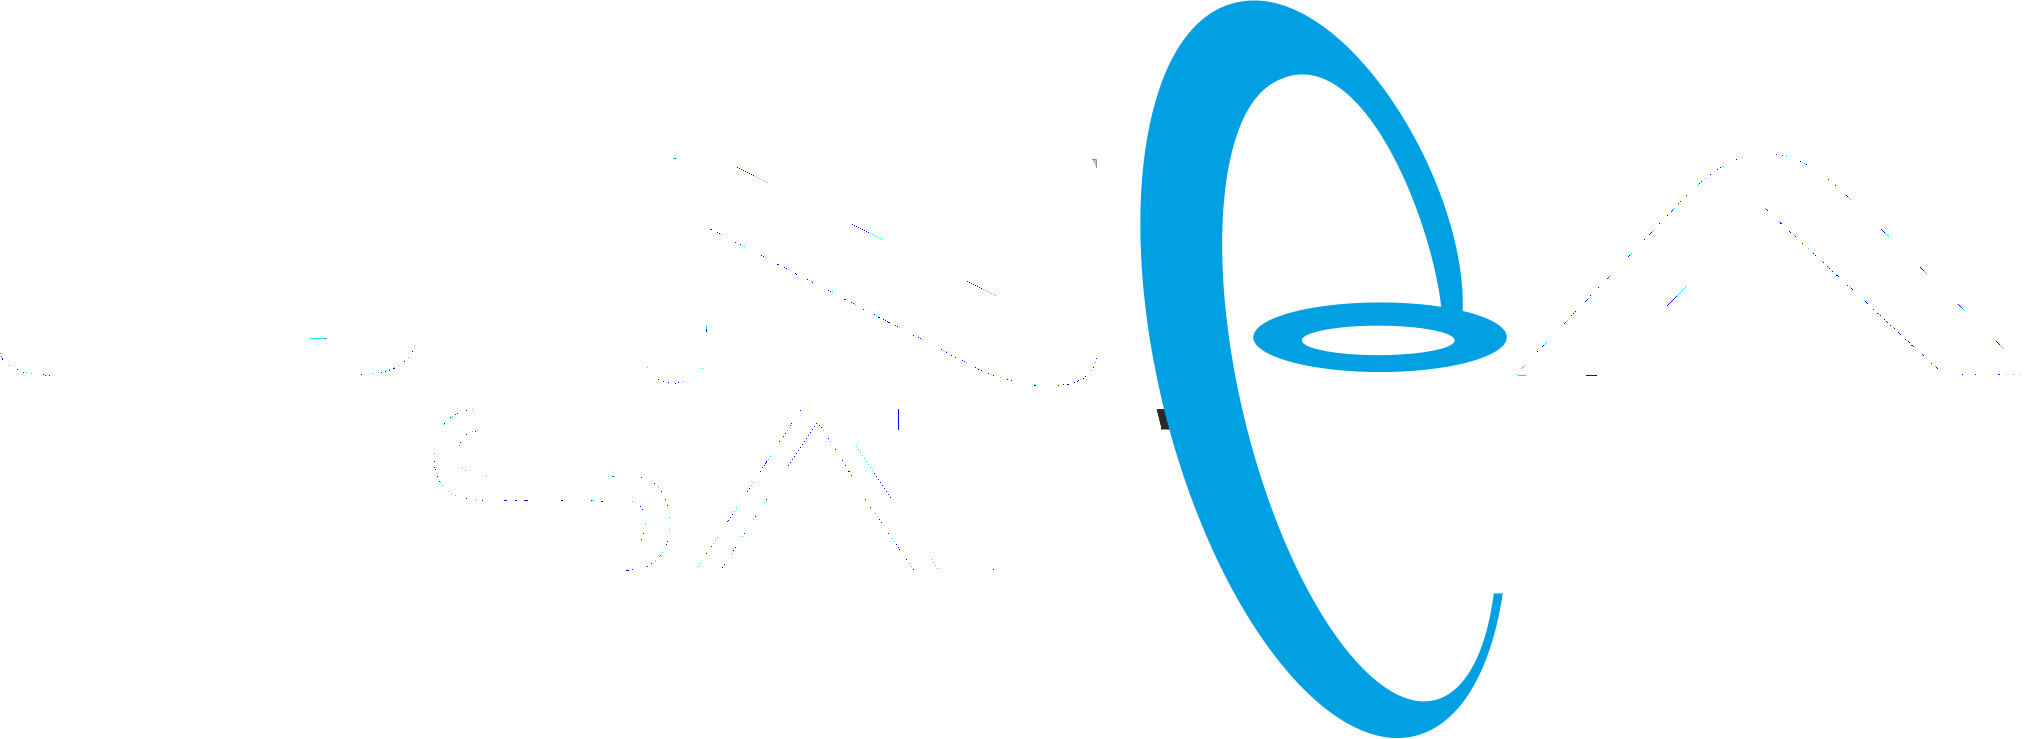 Lineasat - logo dark